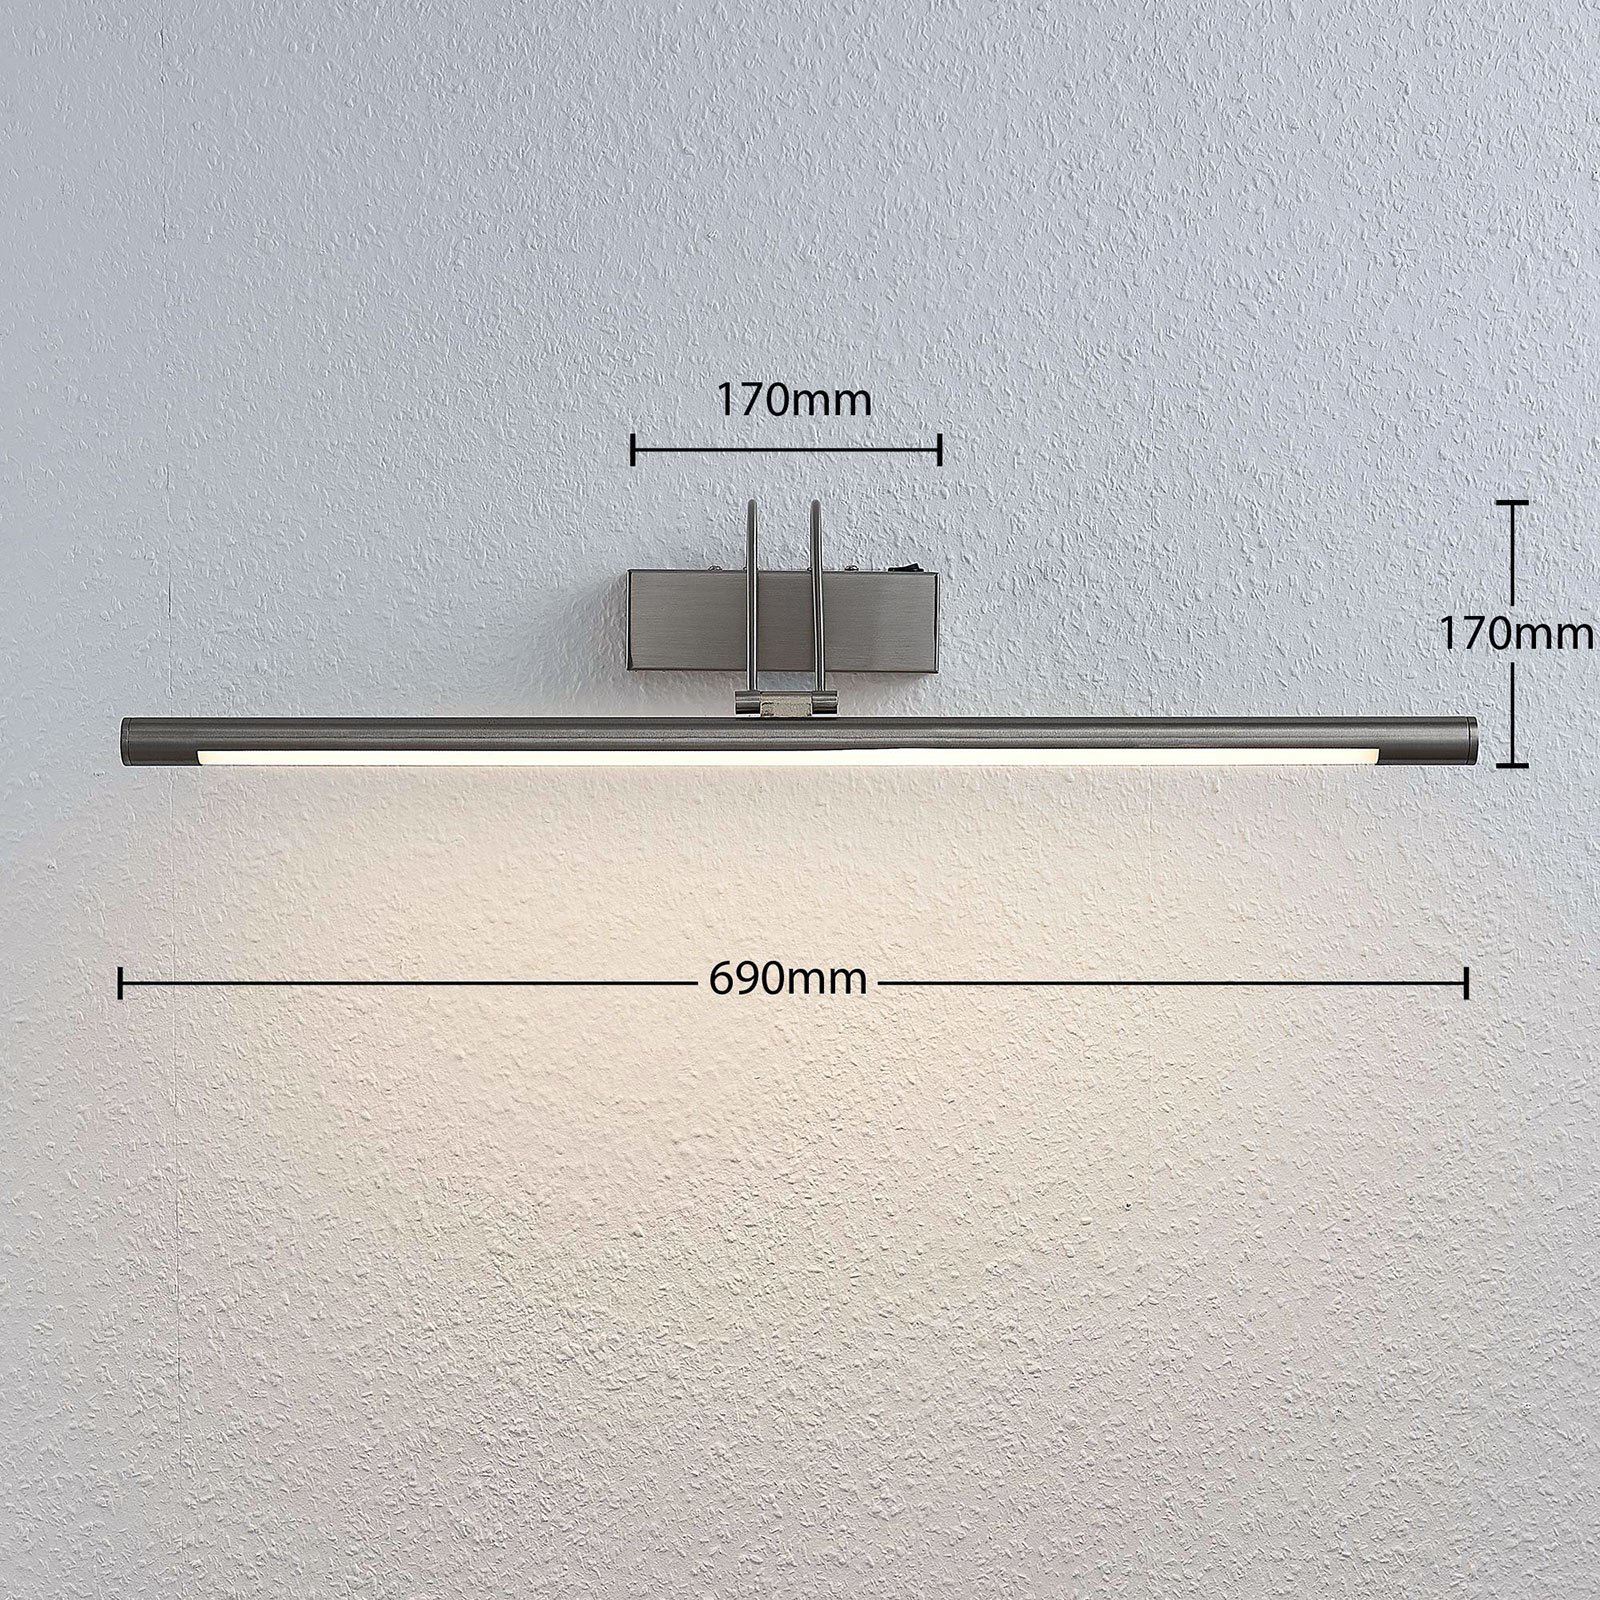 LED-bildlampa Mailine med omkopplare, nickel